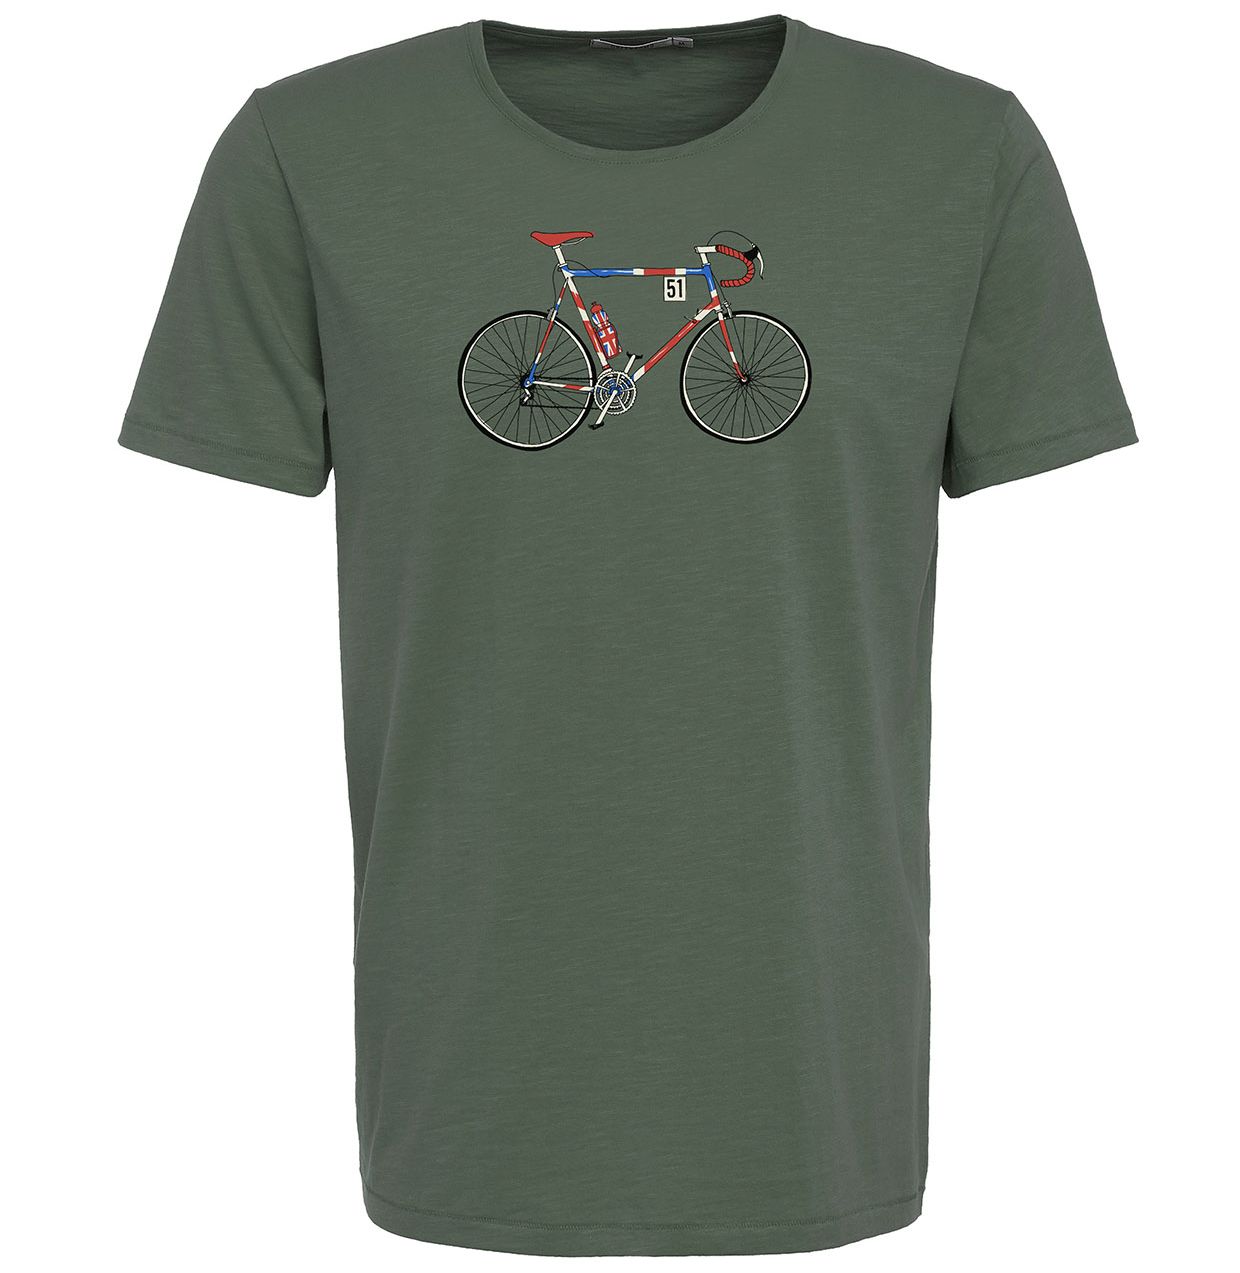 Print T-Shirt Bike Jack Spice Olive